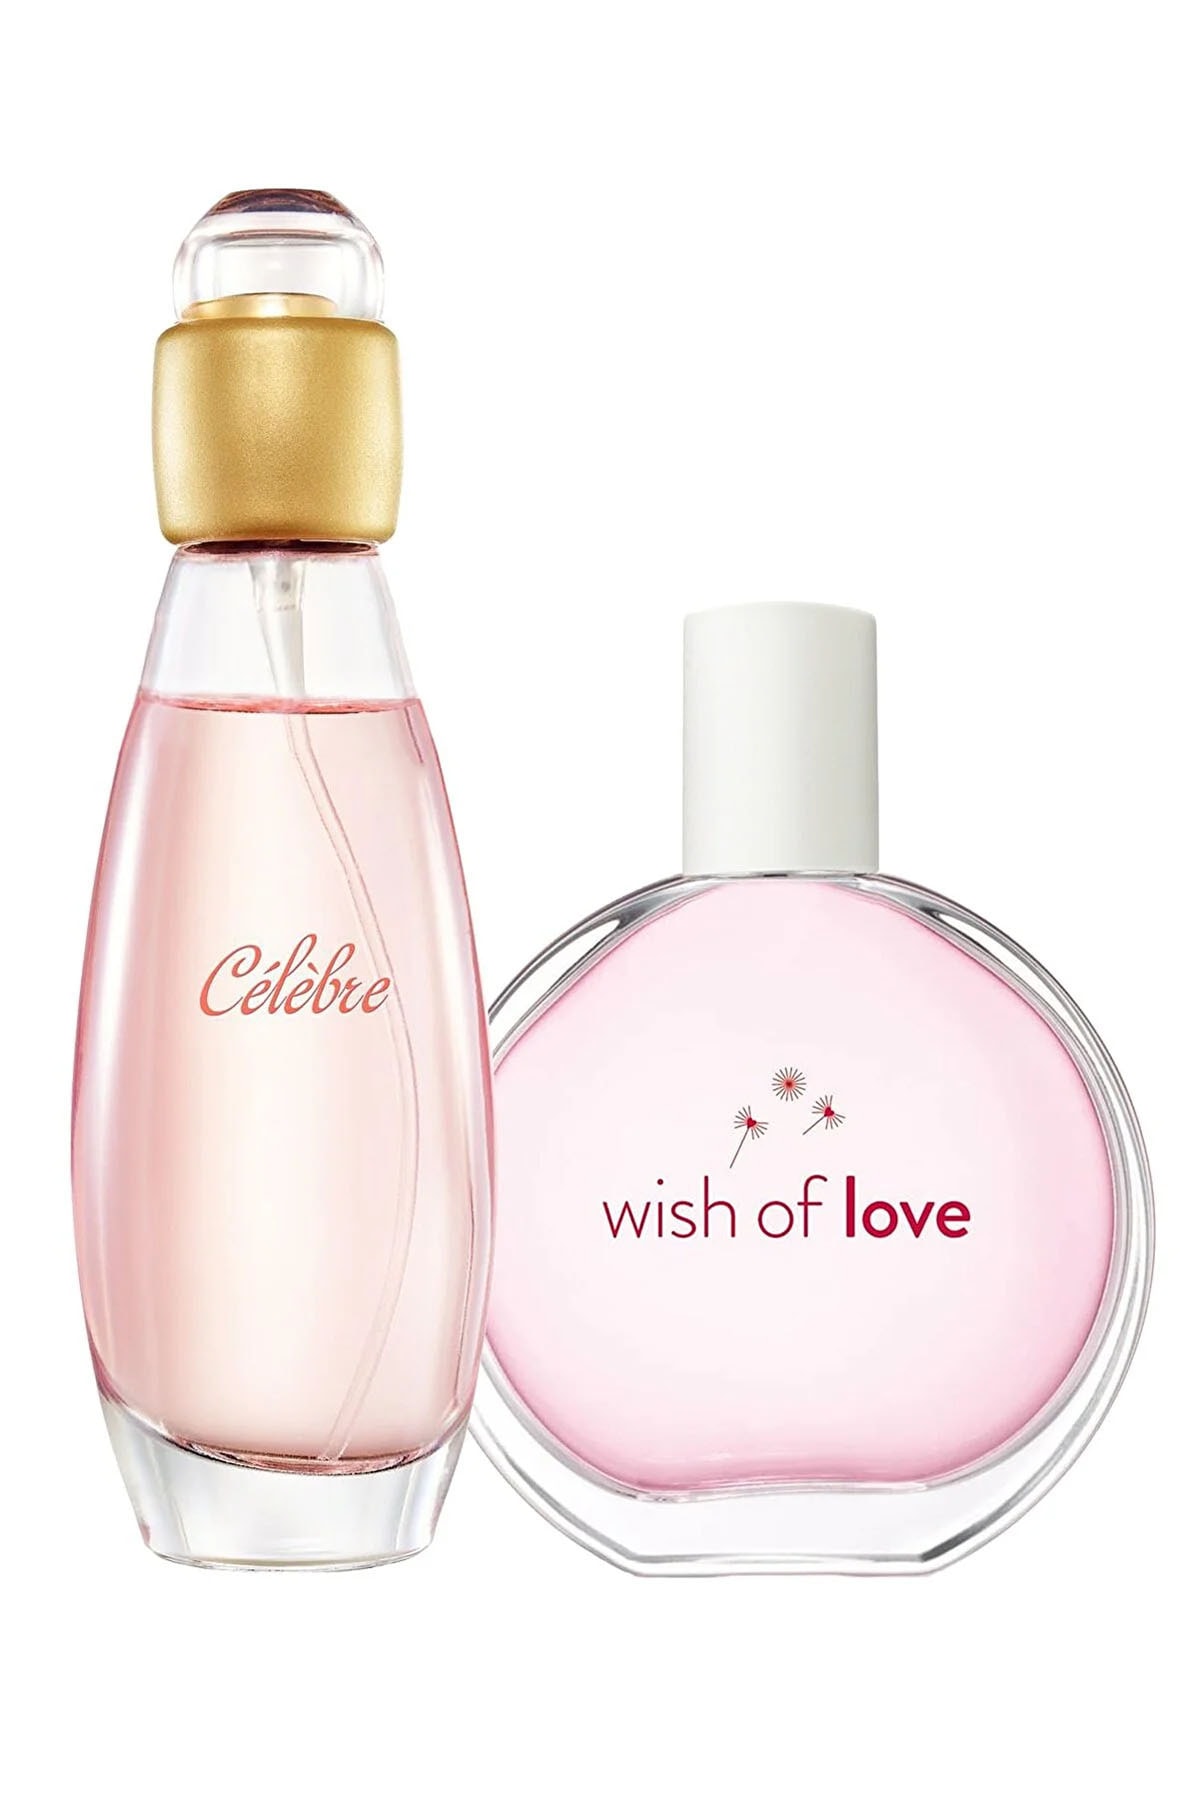 AVON Wish Of Love Ve Celebre Kadın Parfüm Paketi